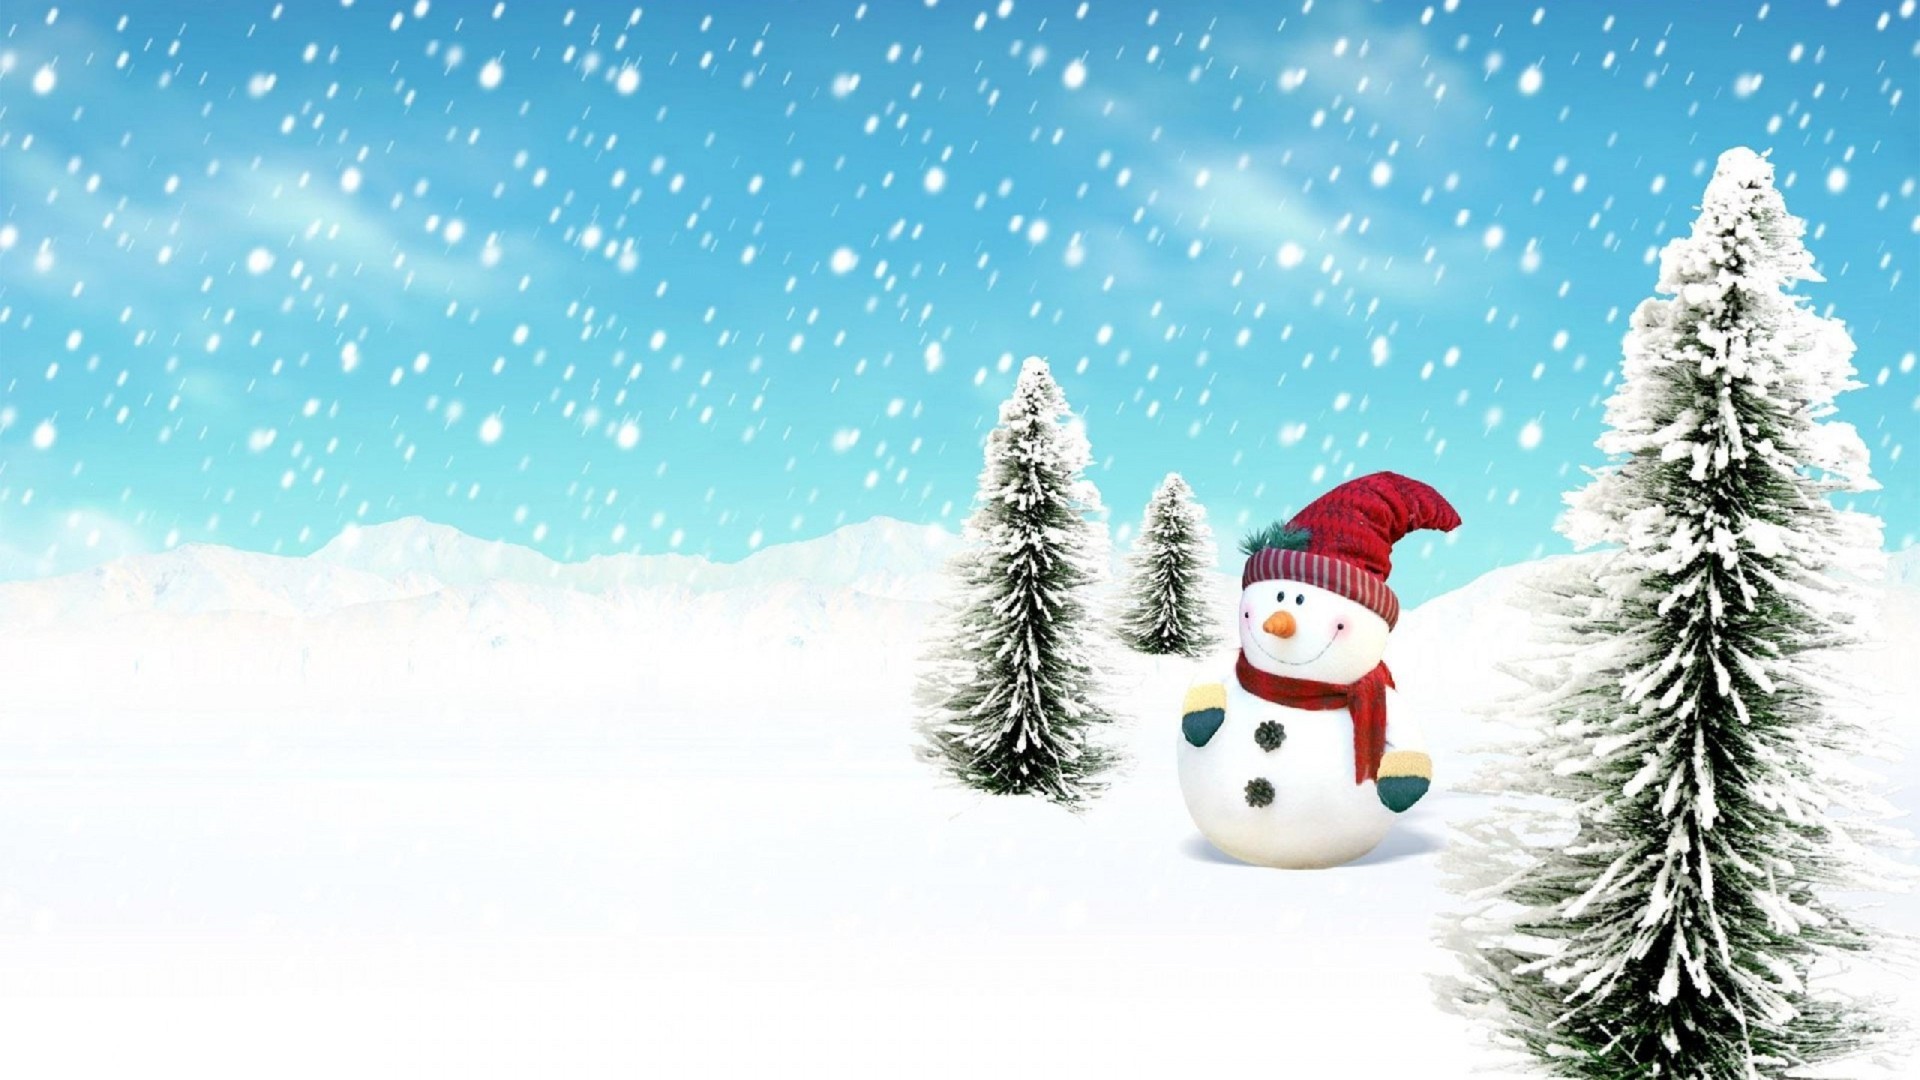 1920x1080 Christmas Snowman Image Wallpaper